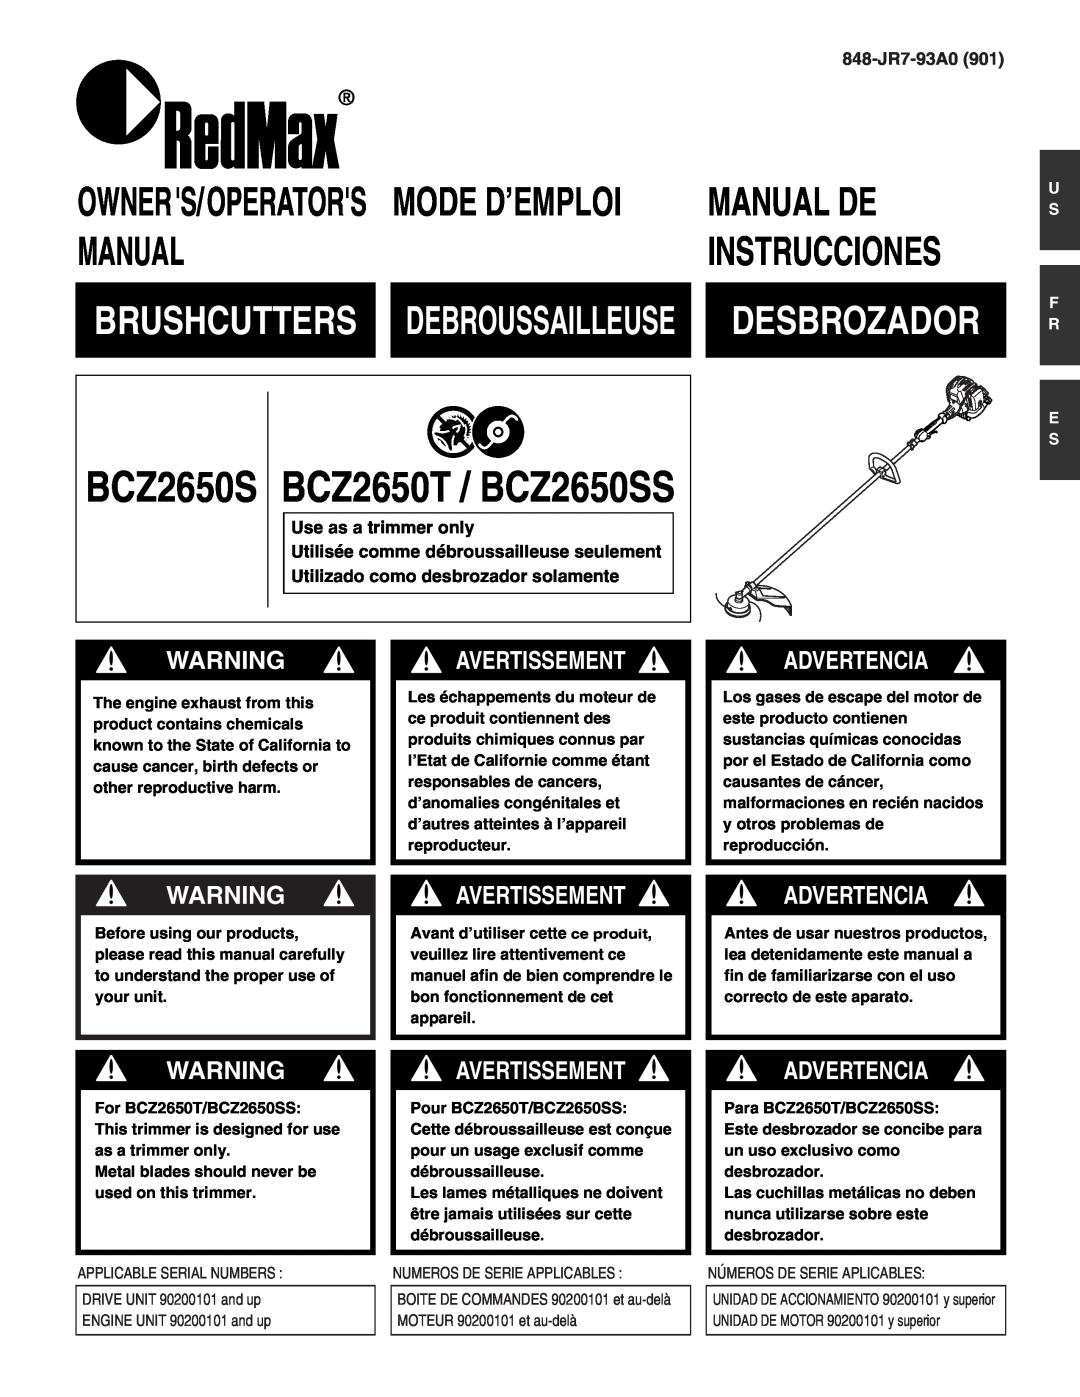 RedMax manual BCZ2650S BCZ2650T / BCZ2650SS, Manual De, Desbrozador, Avertissement, Advertencia, Mode D’Emploi 